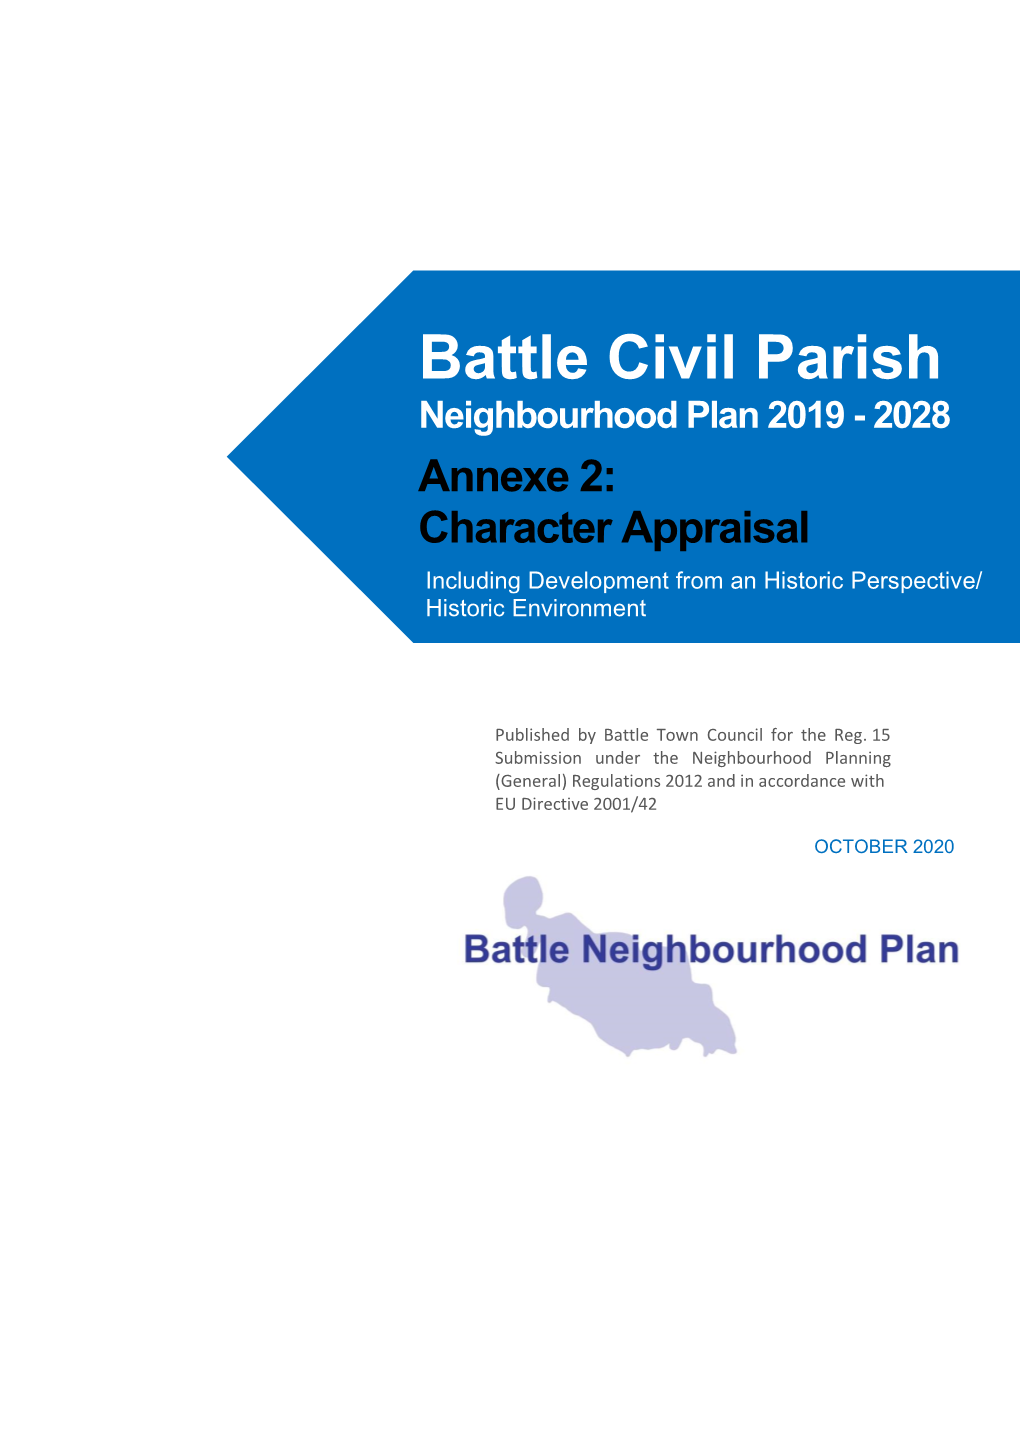 Battle Civil Parish Neighbourhood Plan 2019 - 2028 Annexe 2: Character Appraisal Including Development from an Historic Perspective/ Historic Environment